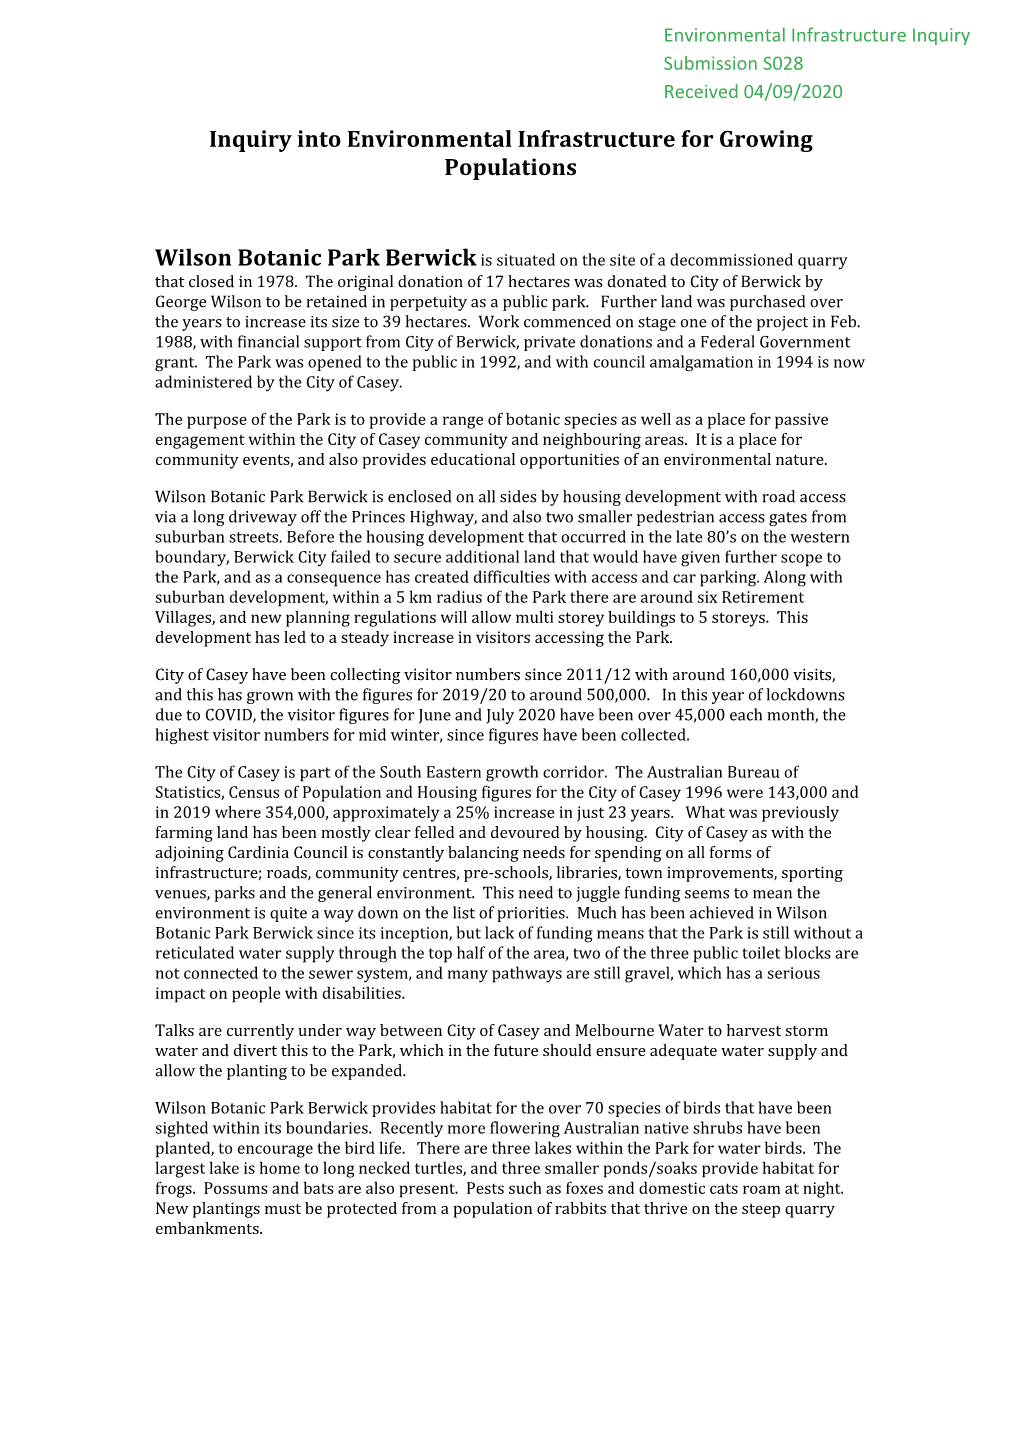 Friends of Wilson Botanic Park Berwick1.46